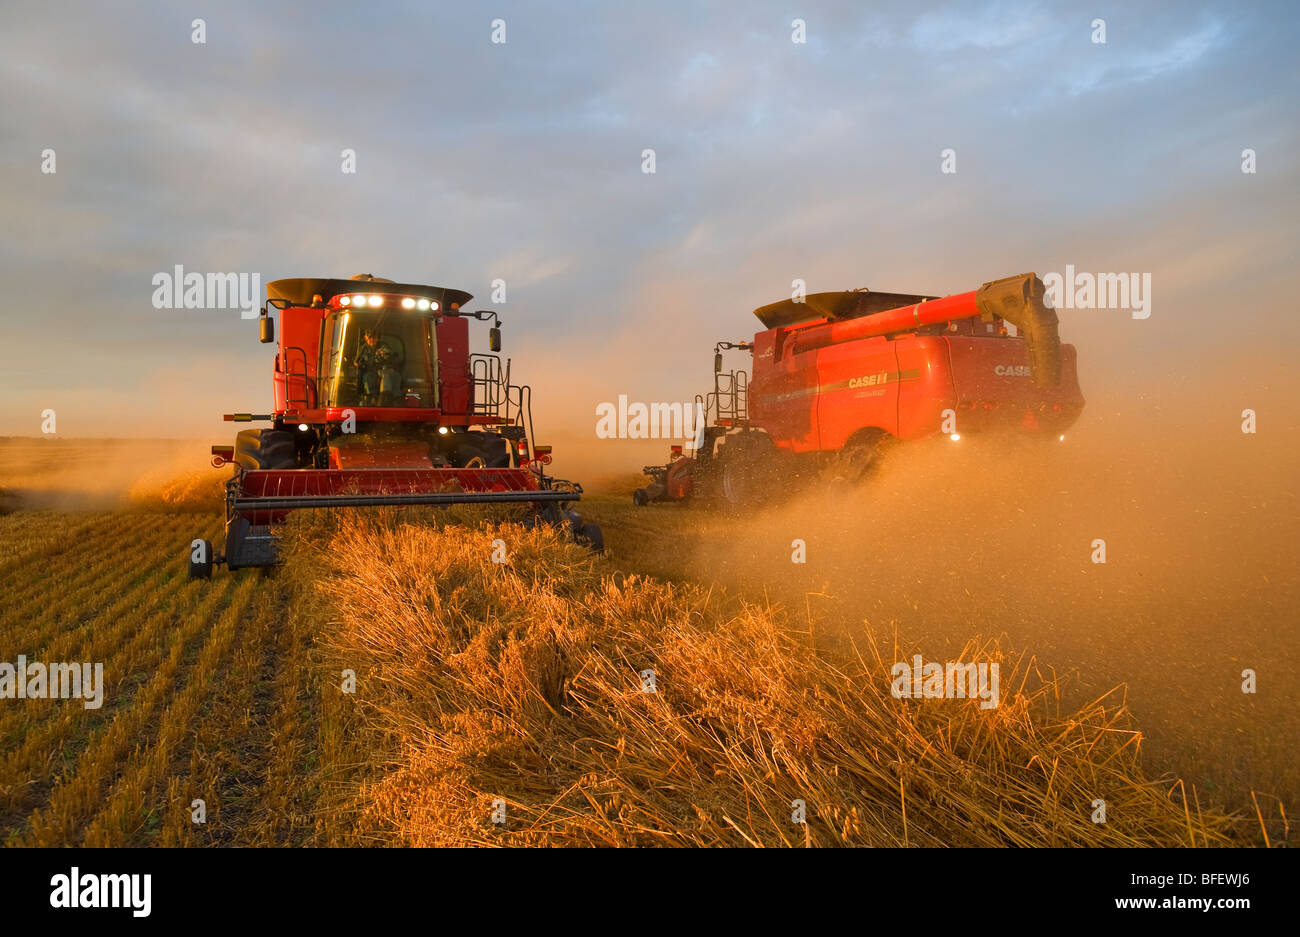 Two combines harvest swathed oats (Avena sativa) near Dugald, Manitoba, Canada Stock Photo